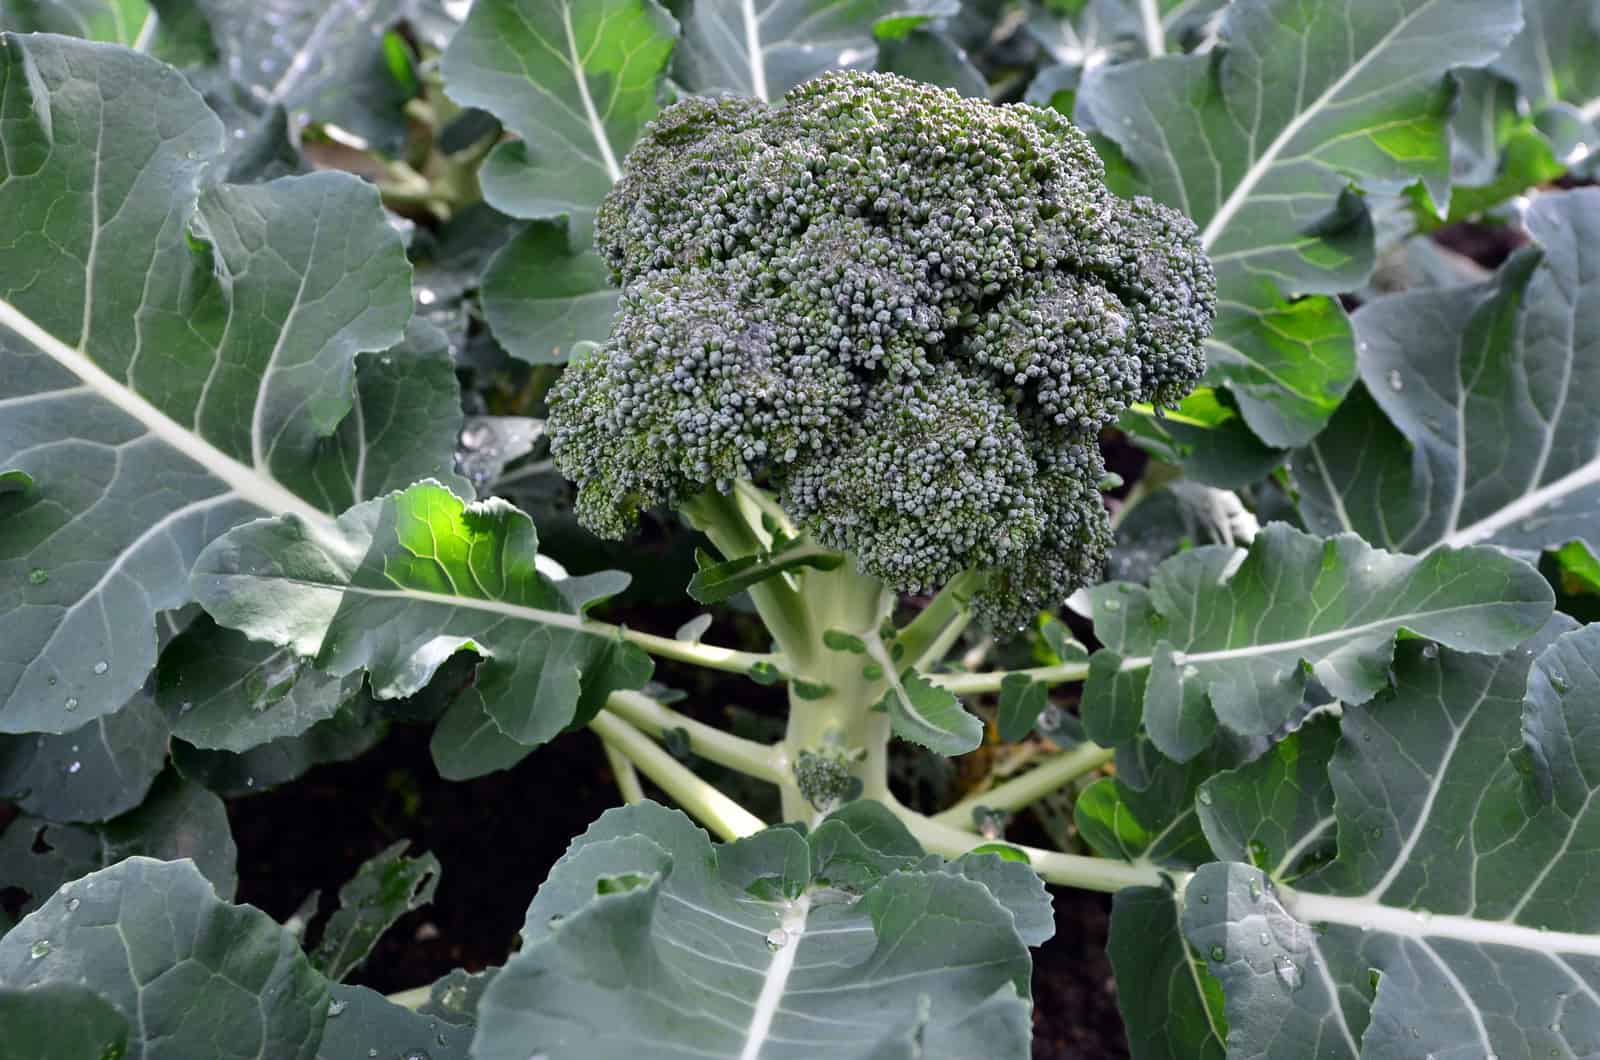 Broccoli near harvest